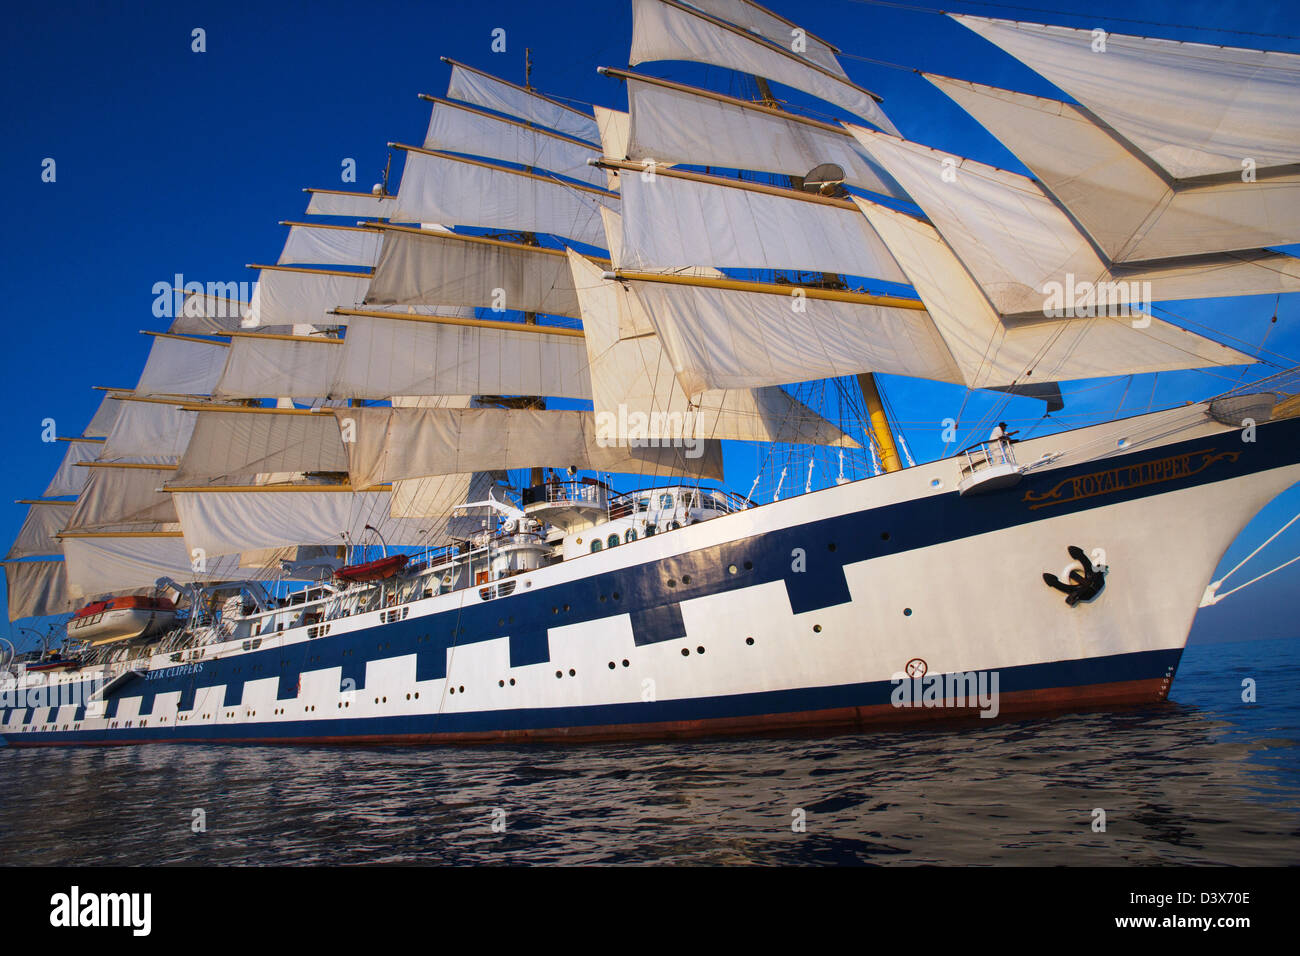 Clipper Schiff im Meer, Tyrrhenischen Meer, Liparischen Inseln, Provinz Messina, Sizilien, Italien Stockfoto